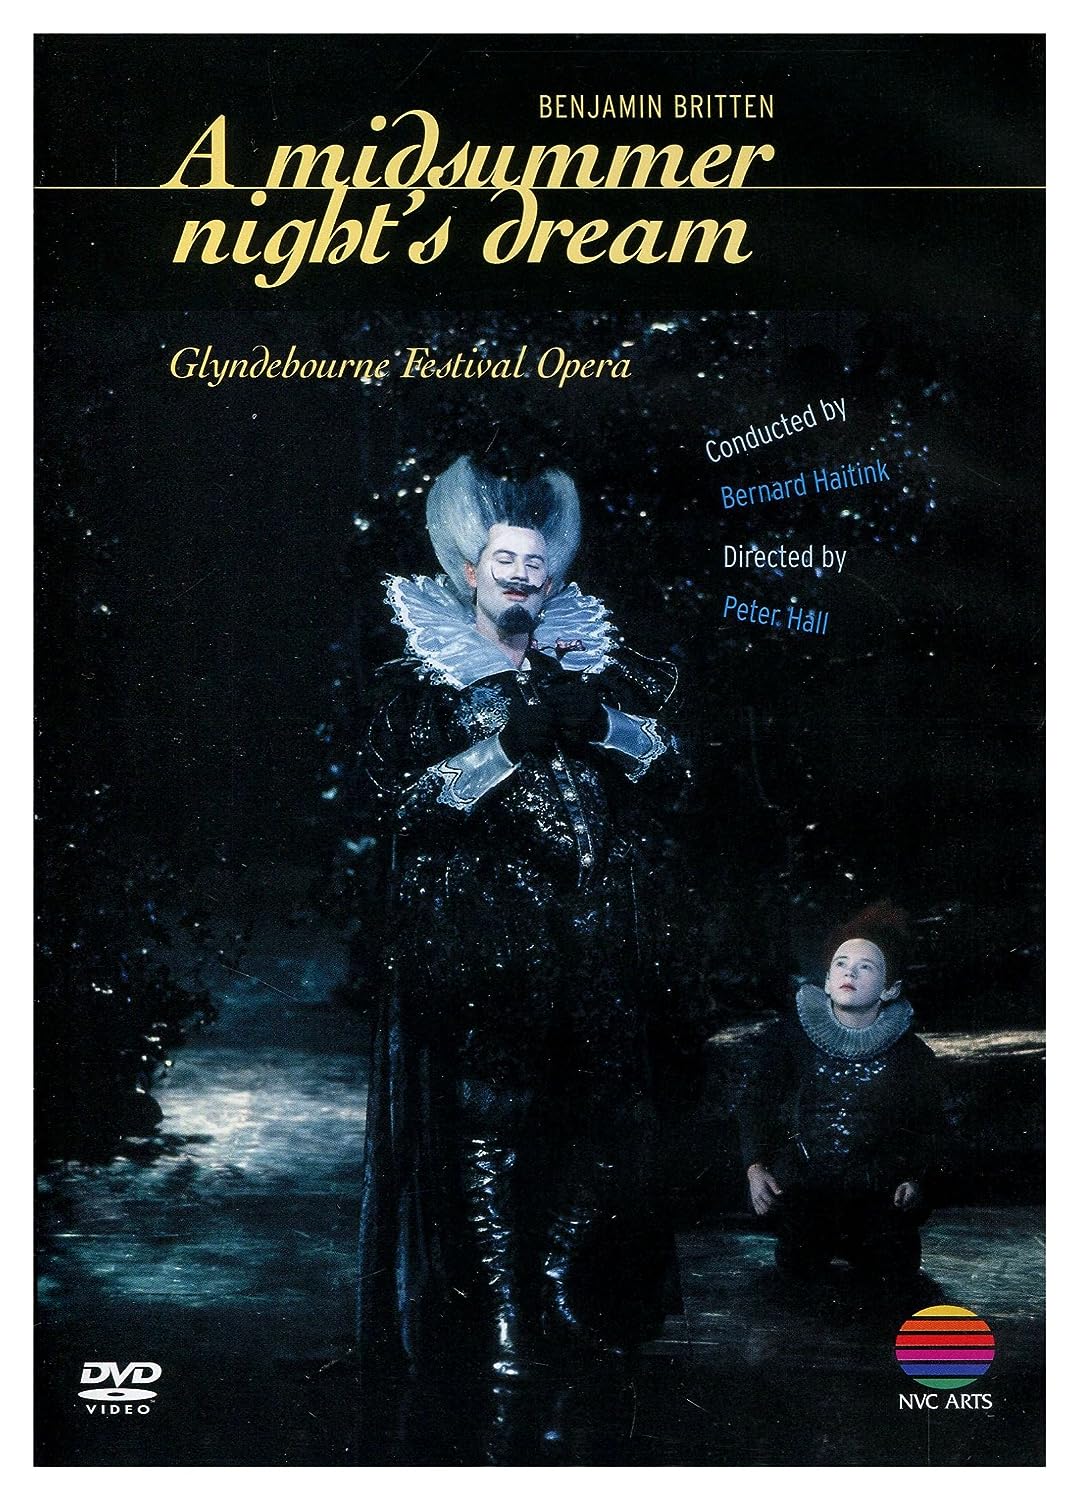 DVD-Rezension:  Benjamin Britten, A Midsummer Night’s Dream  klassik-begeistert.de, 31. August 2023